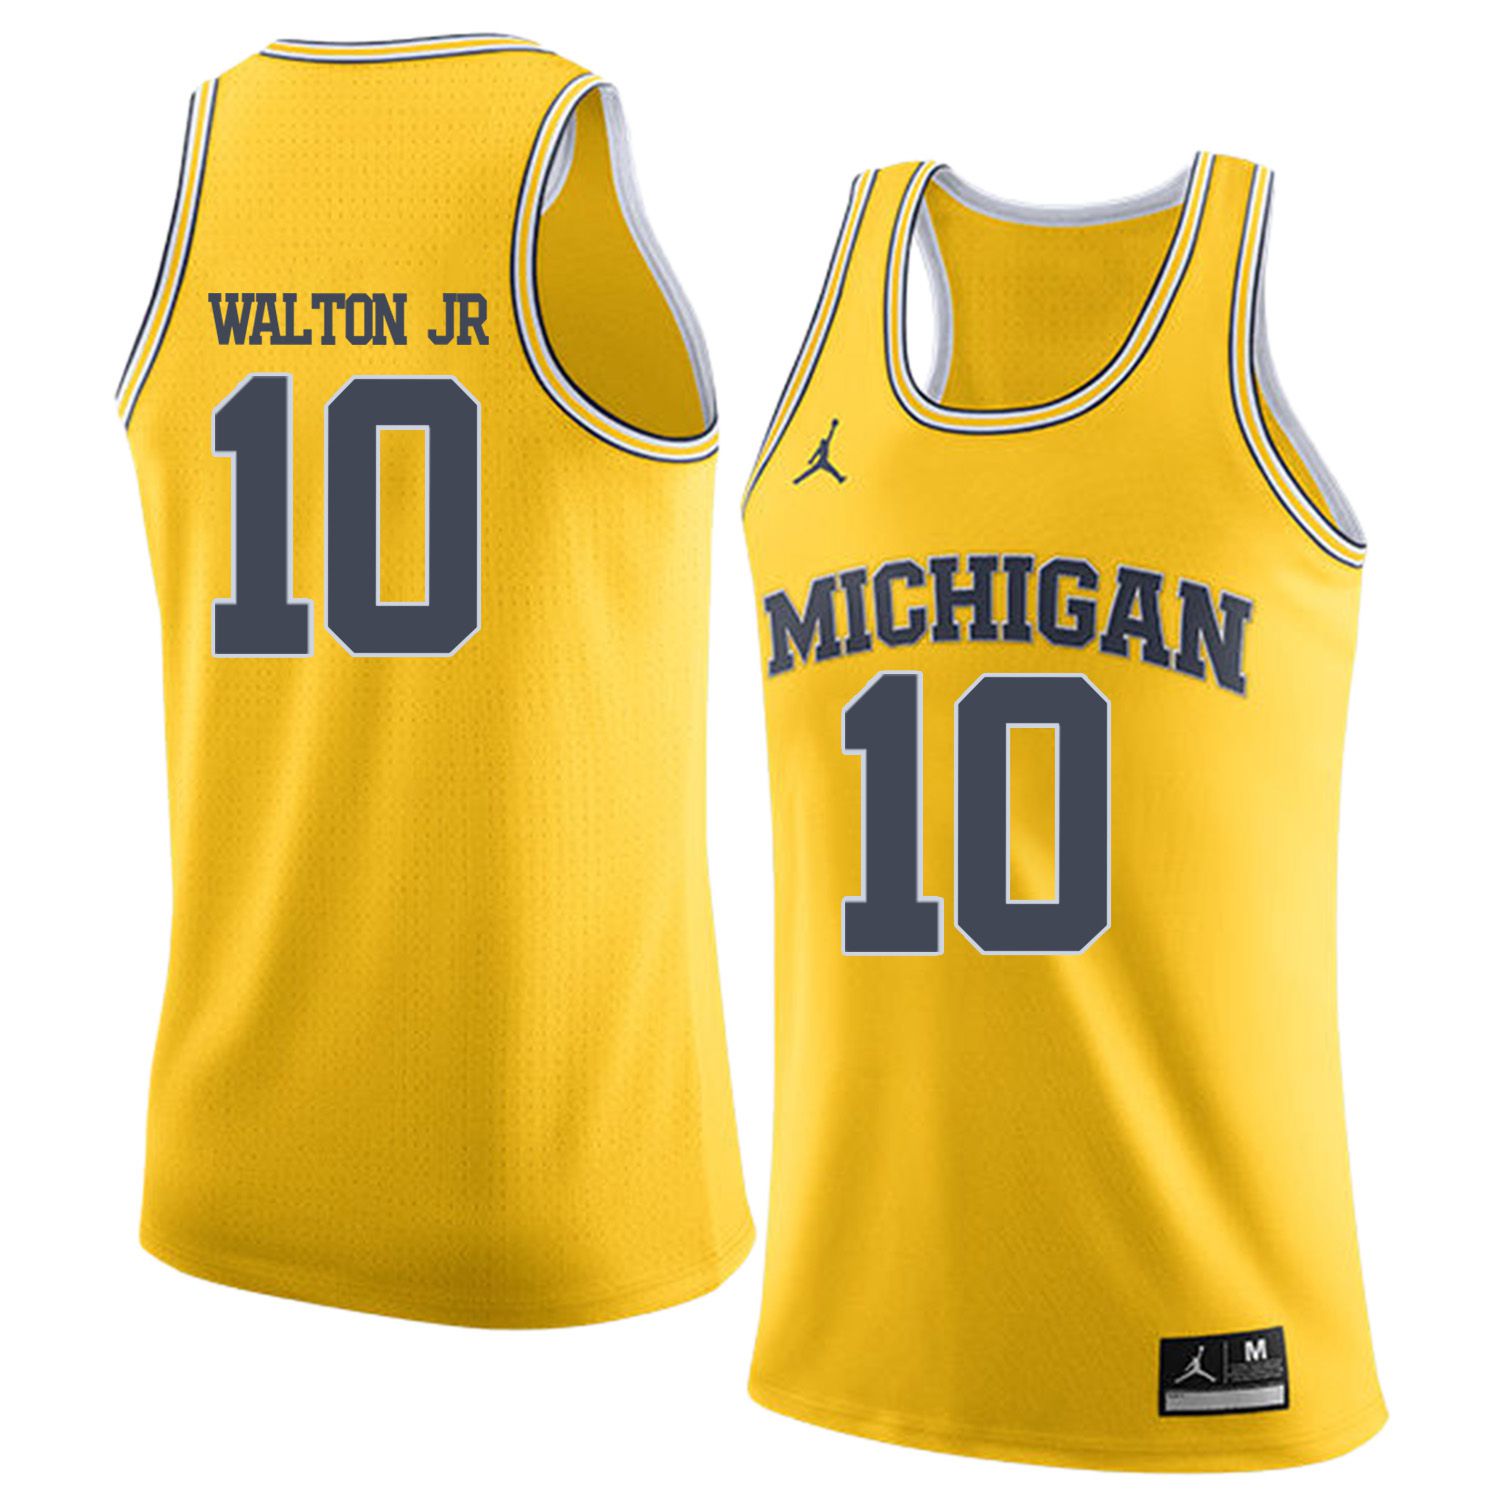 Men Jordan University of Michigan Basketball Yellow 10 walton jr Customized NCAA Jerseys